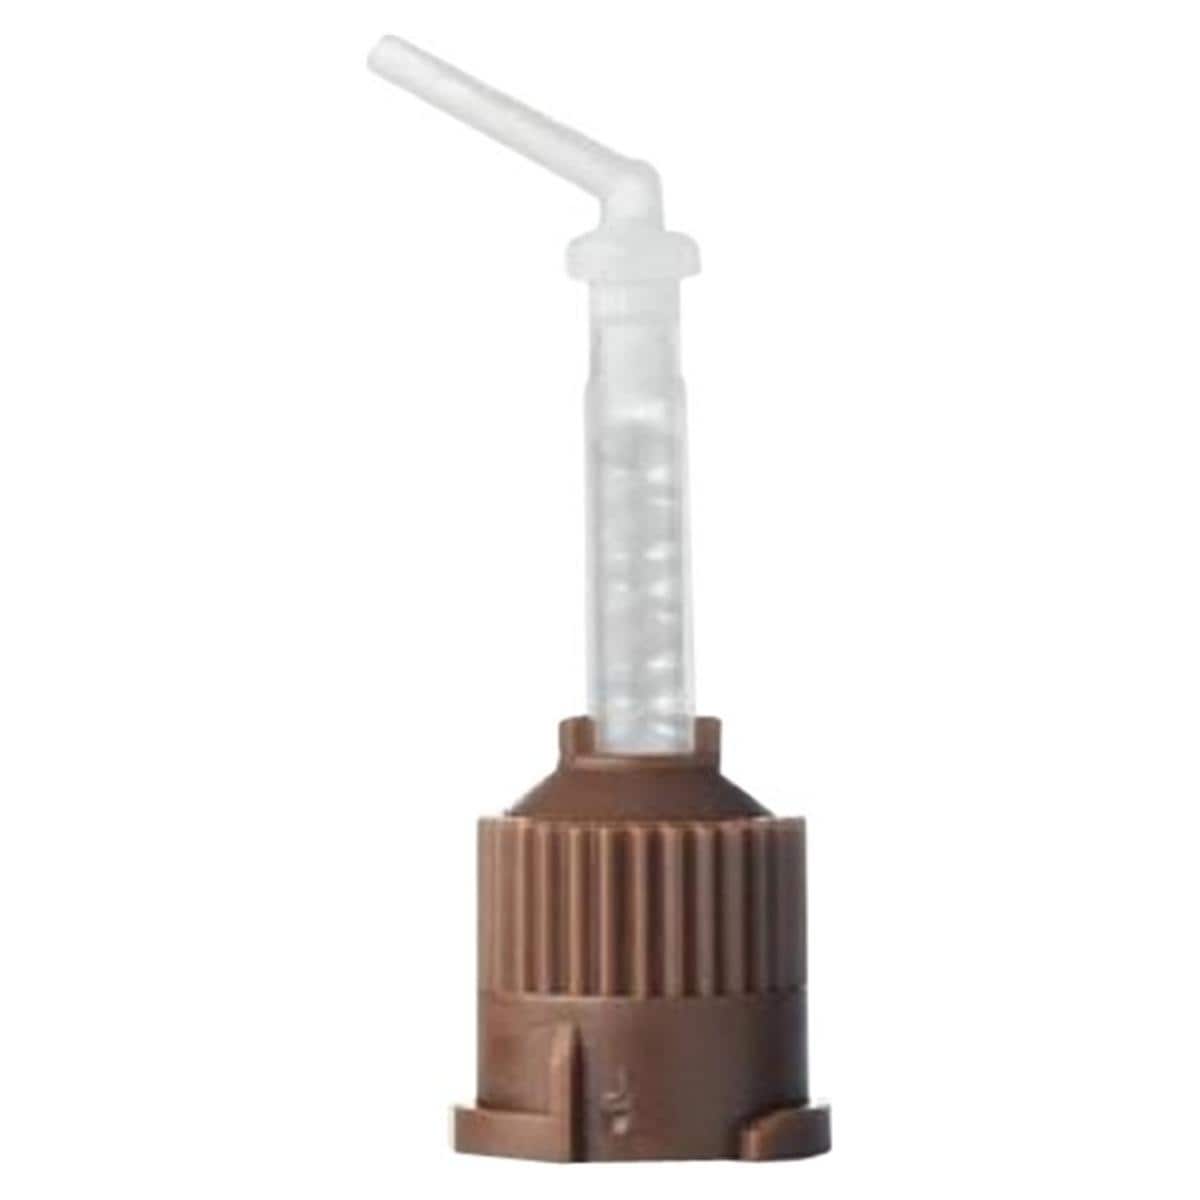 Dual-Syringe mixing & intraoral tip - extra 81257P, 30 pcs